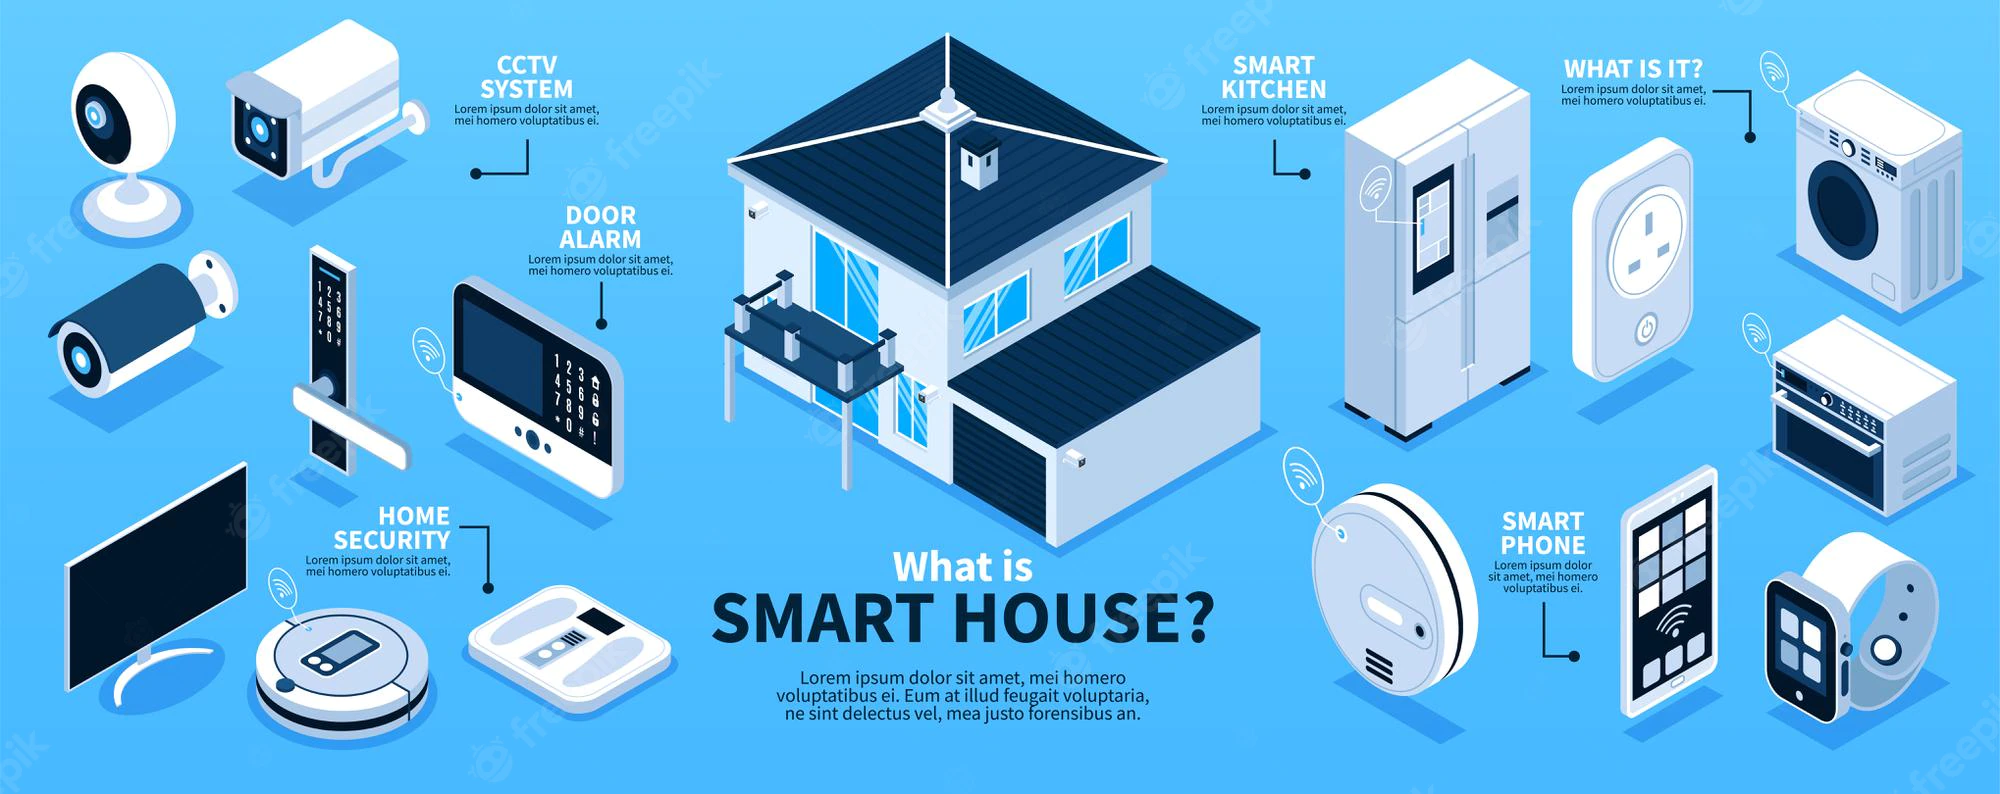 StemKit: SmartHouse